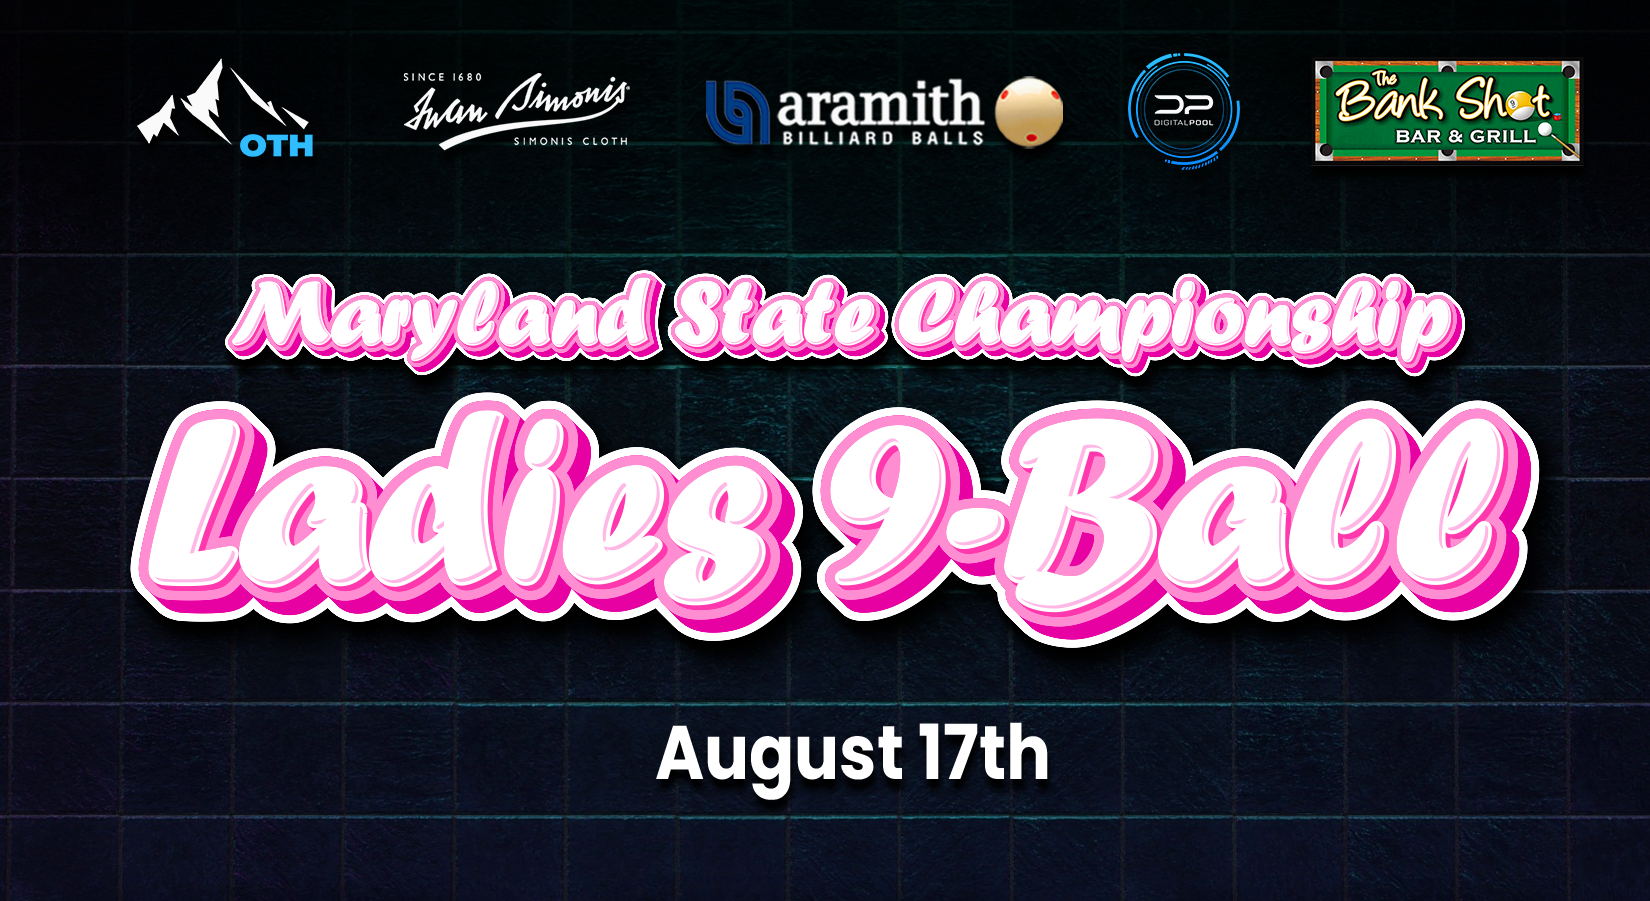 Aug 17th - Ladies Maryland State Bar Table 9-Ball Championship